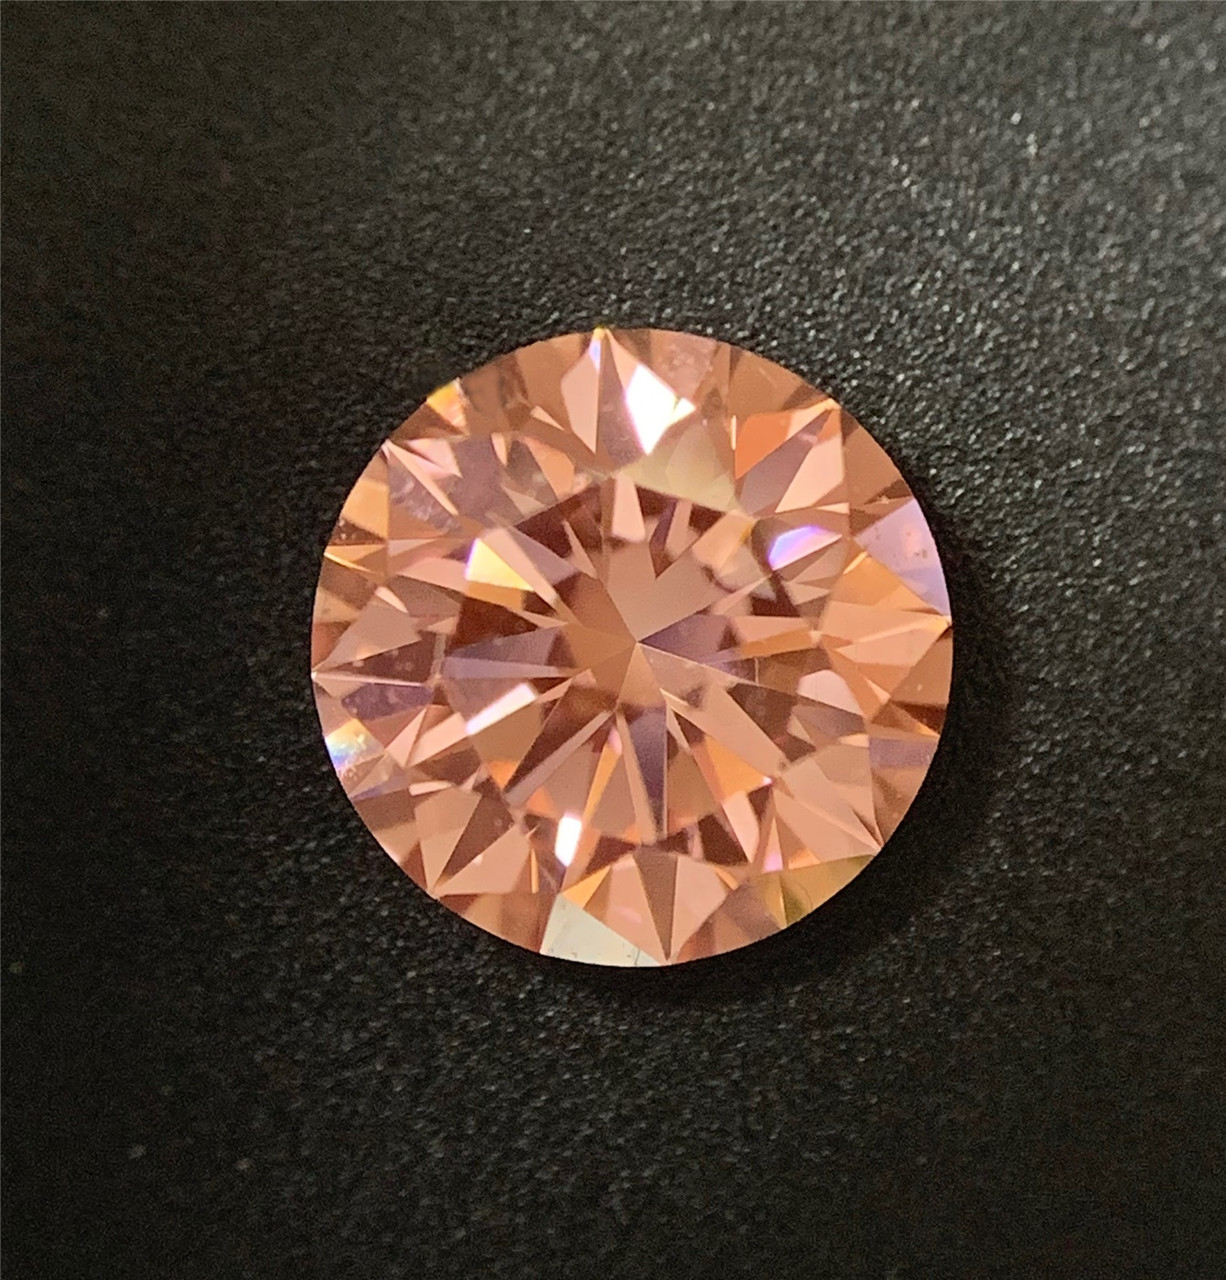 .55ct Fancy Pink Diamond Necklace set in 14K Rose Gold